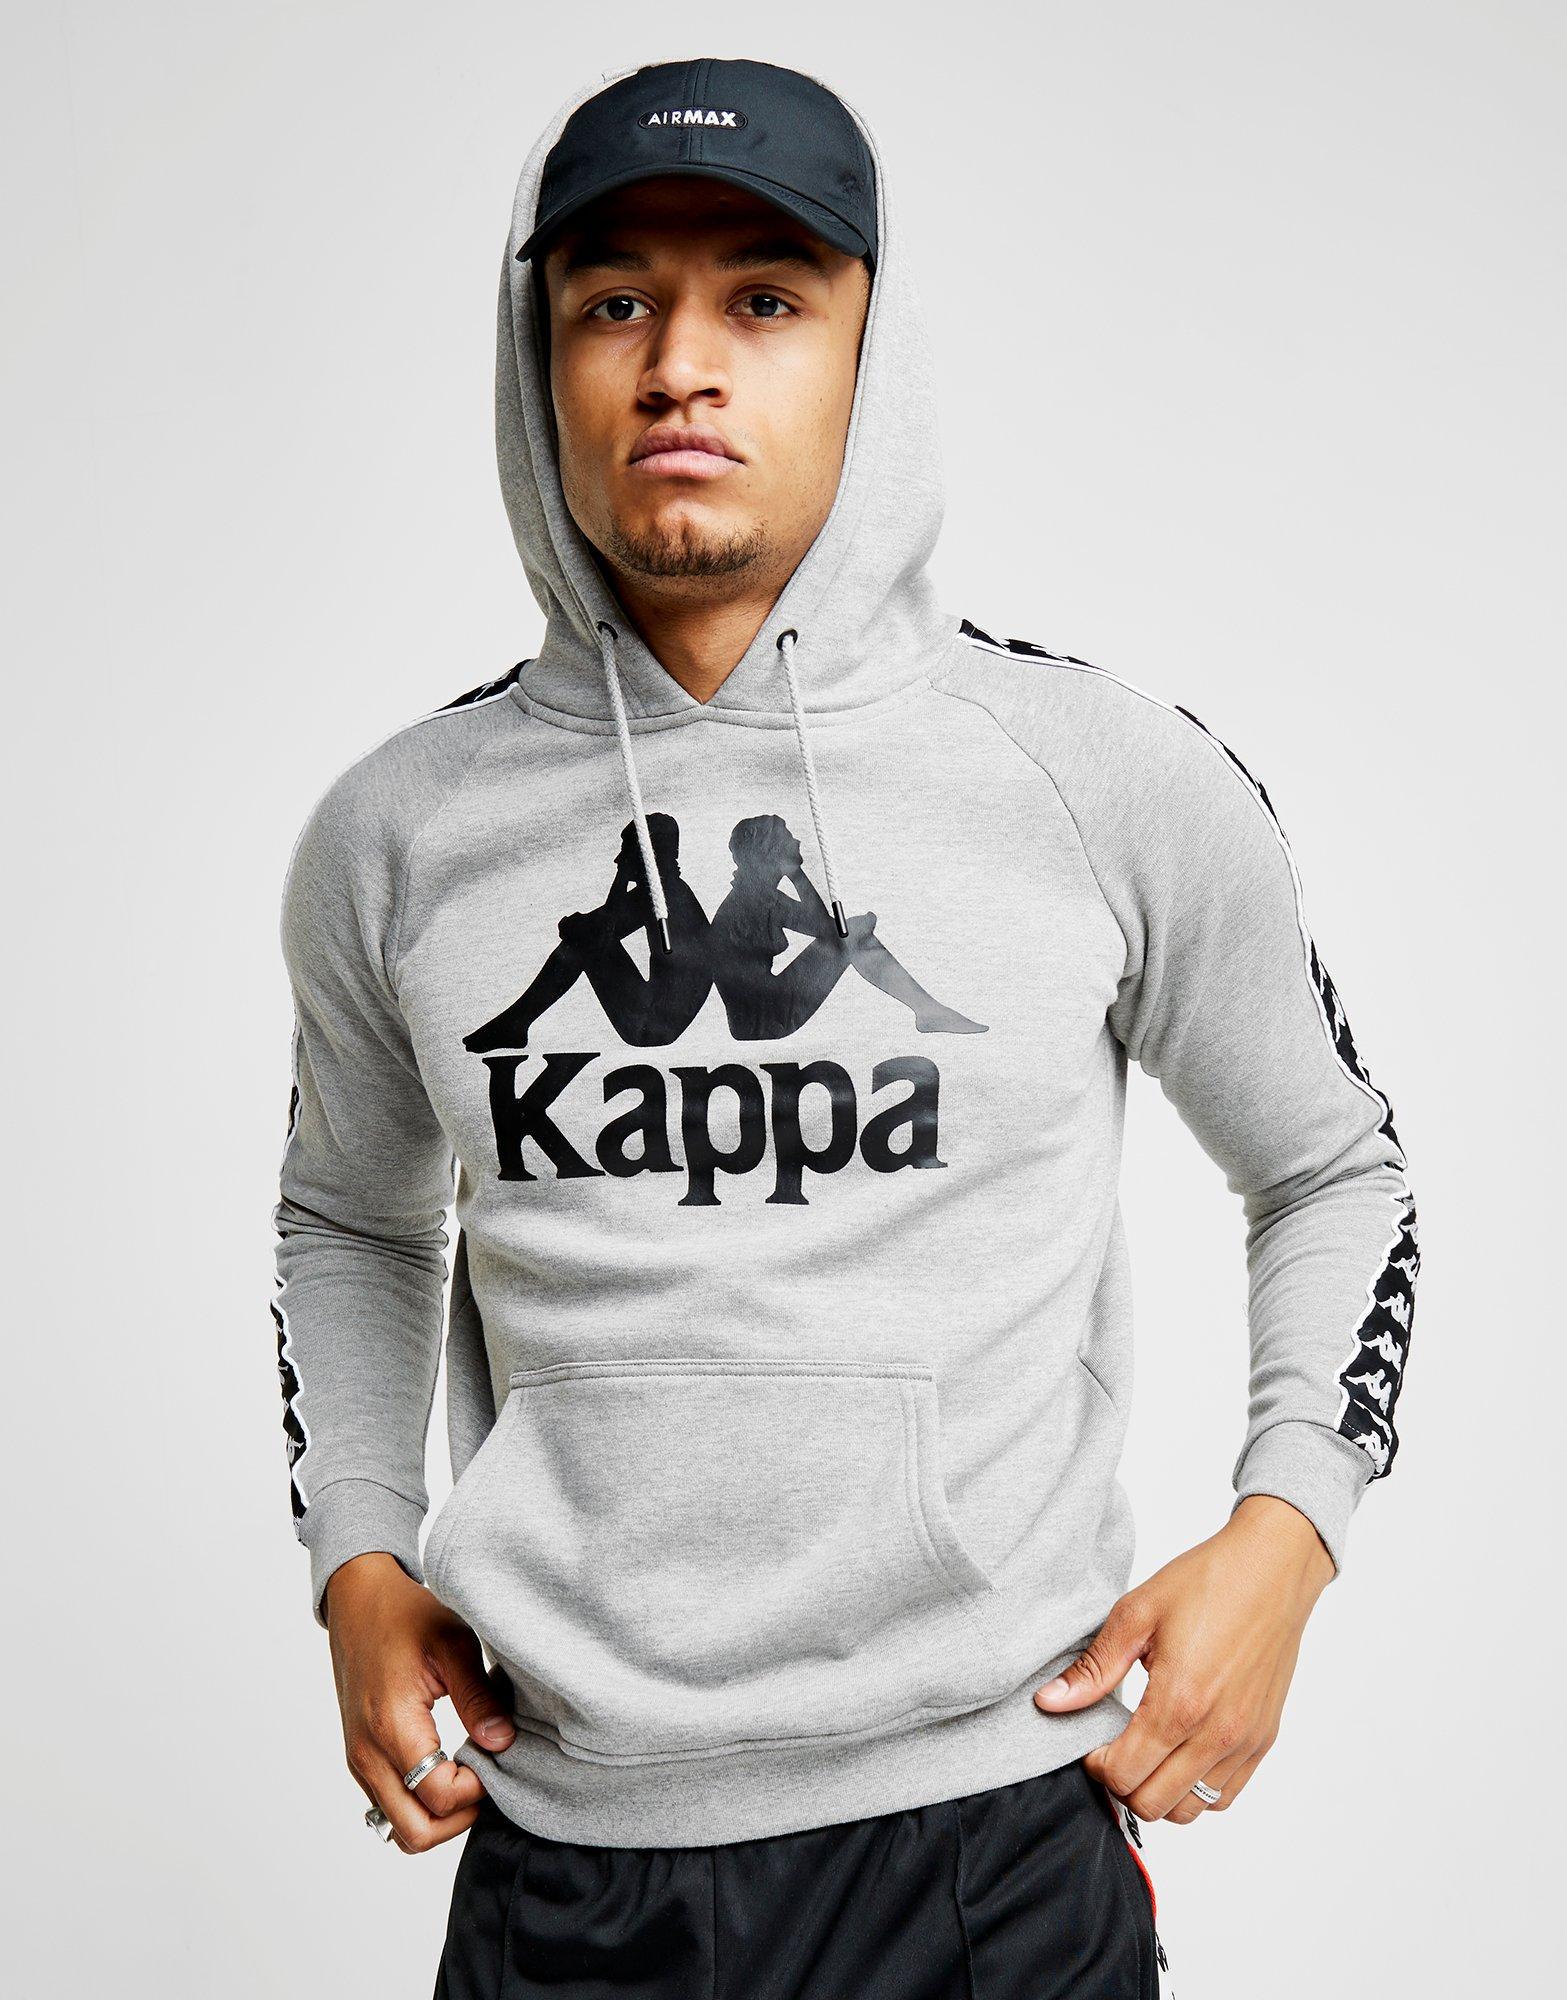 kappa authentic hurtado pullover hoodie,therugbycatalog.com